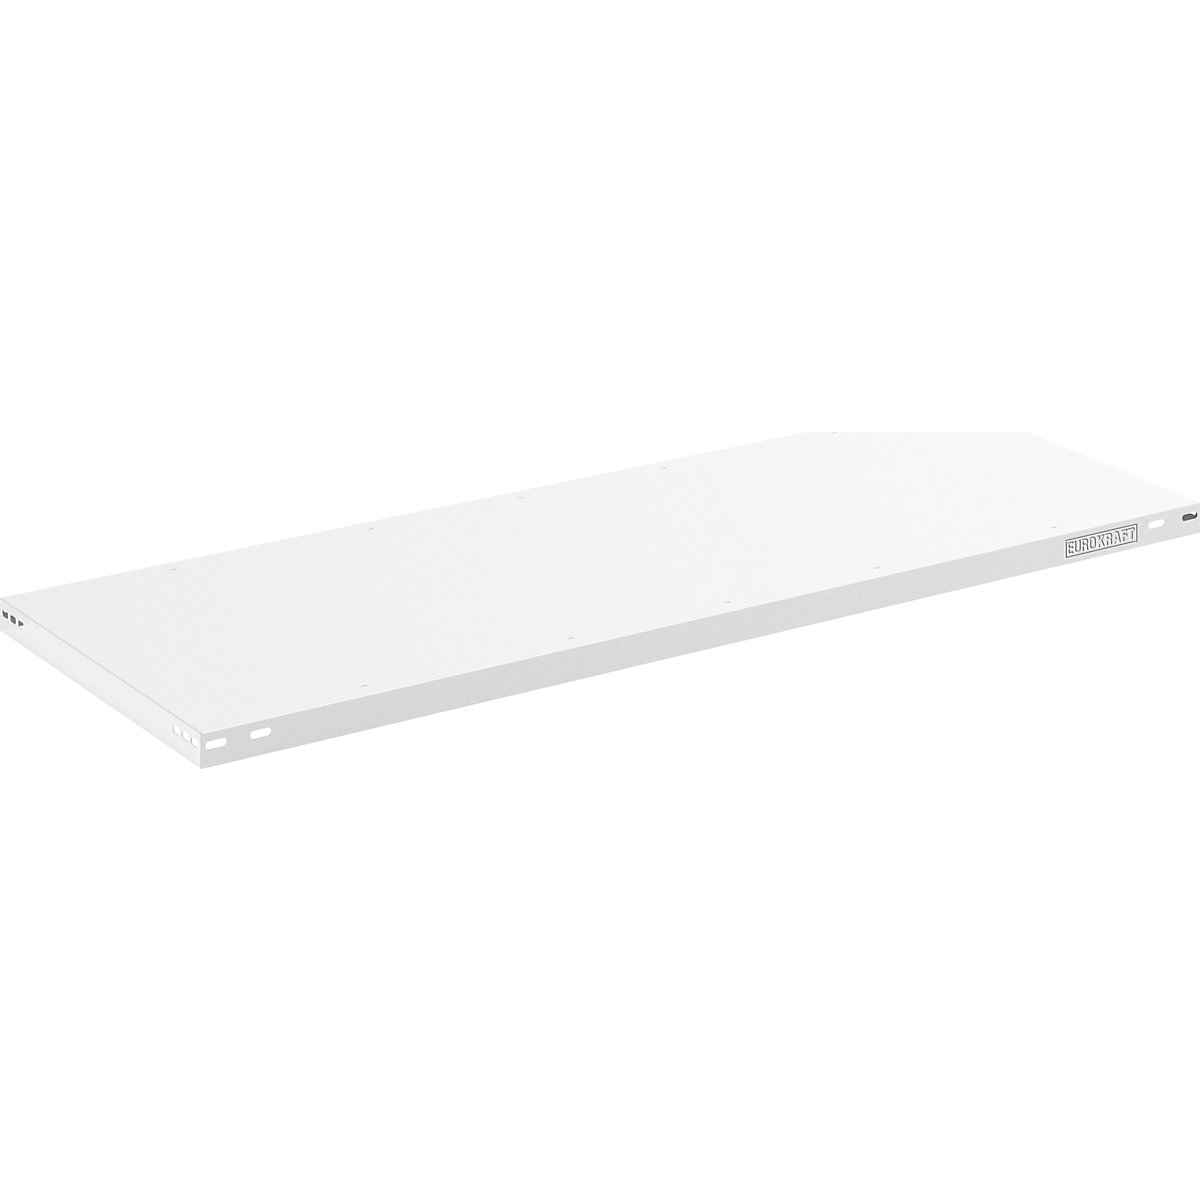 Steel shelf, max. load 125 kg – eurokraft pro, light grey, WxD 1300 x 600 mm